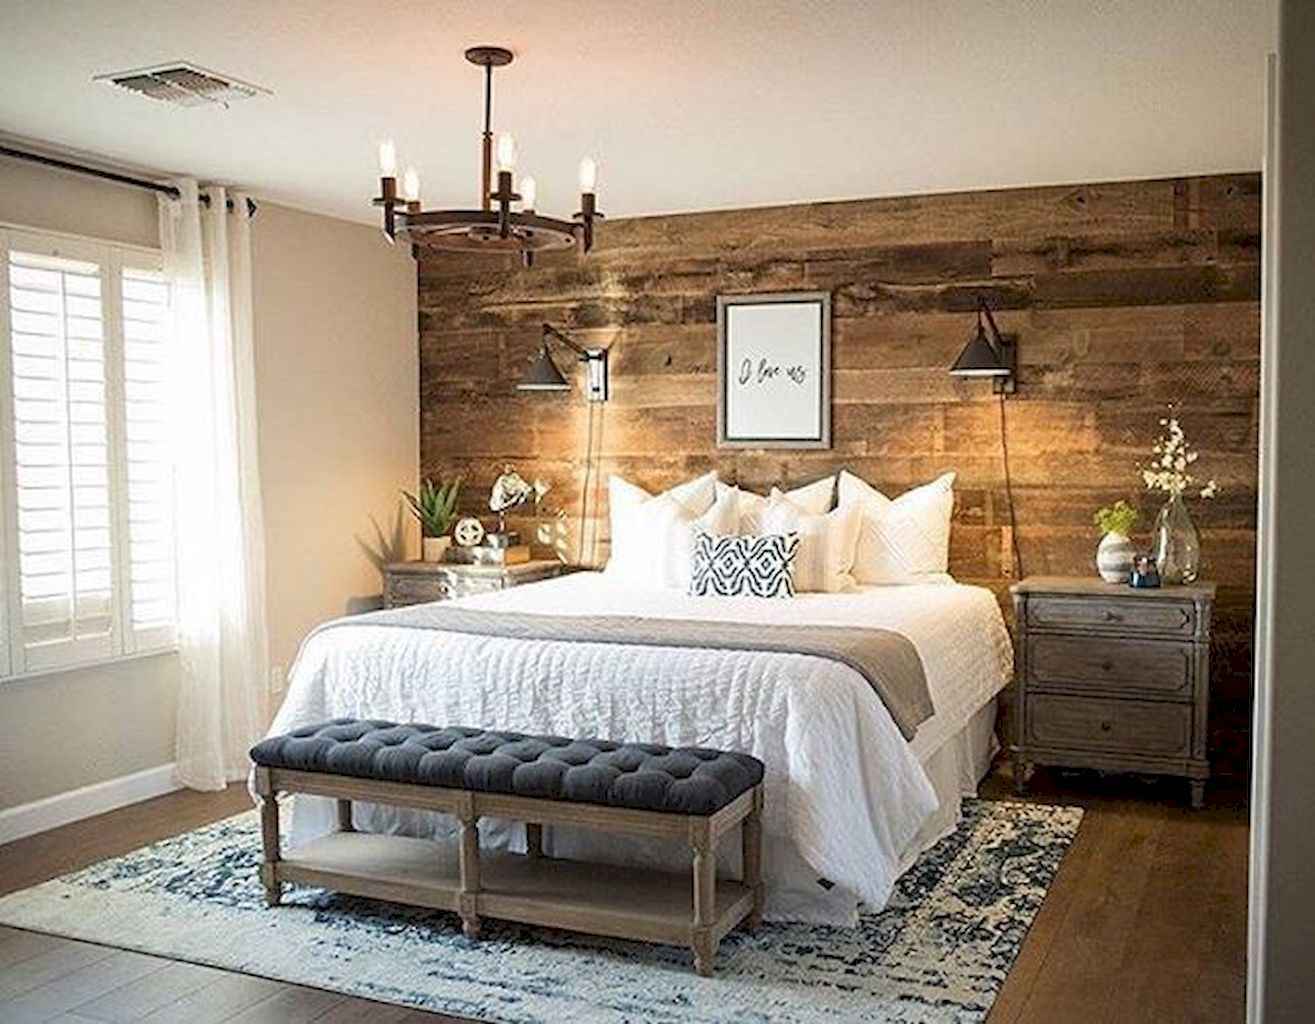 3 Farmhouse Master Bedroom Ideas